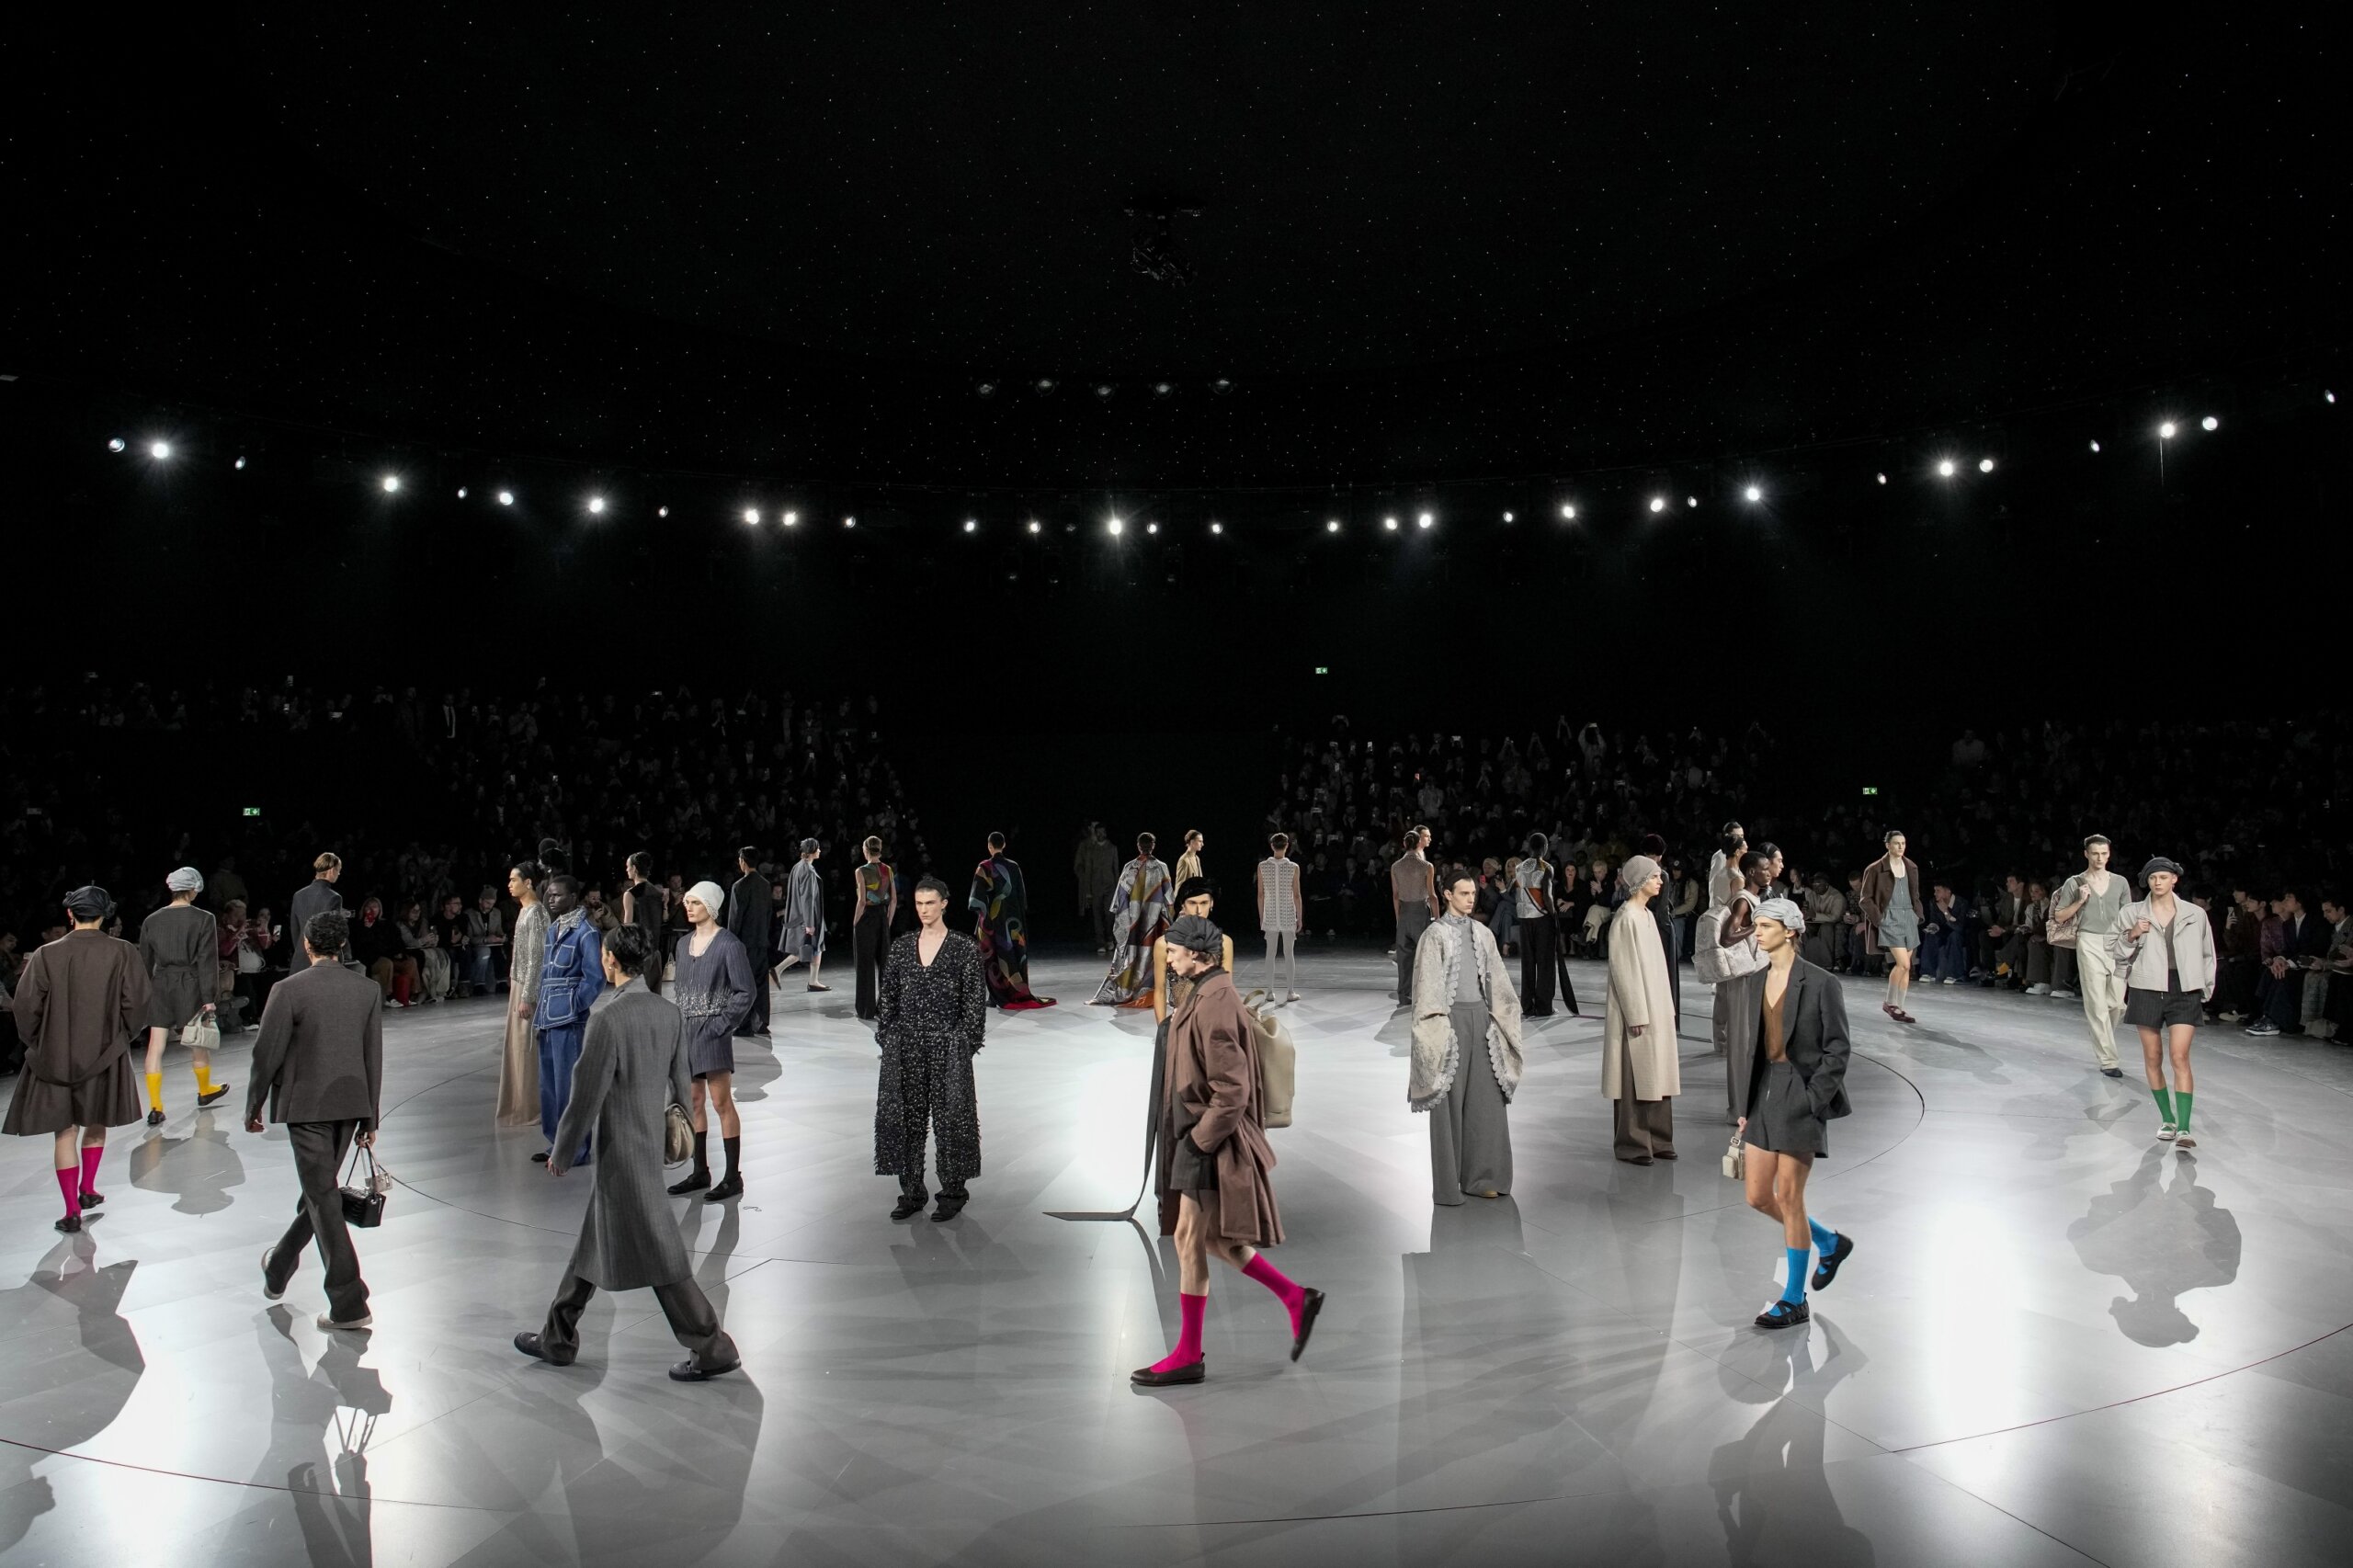 Dior puts on a daytime fashion ballet under the Parisian stars